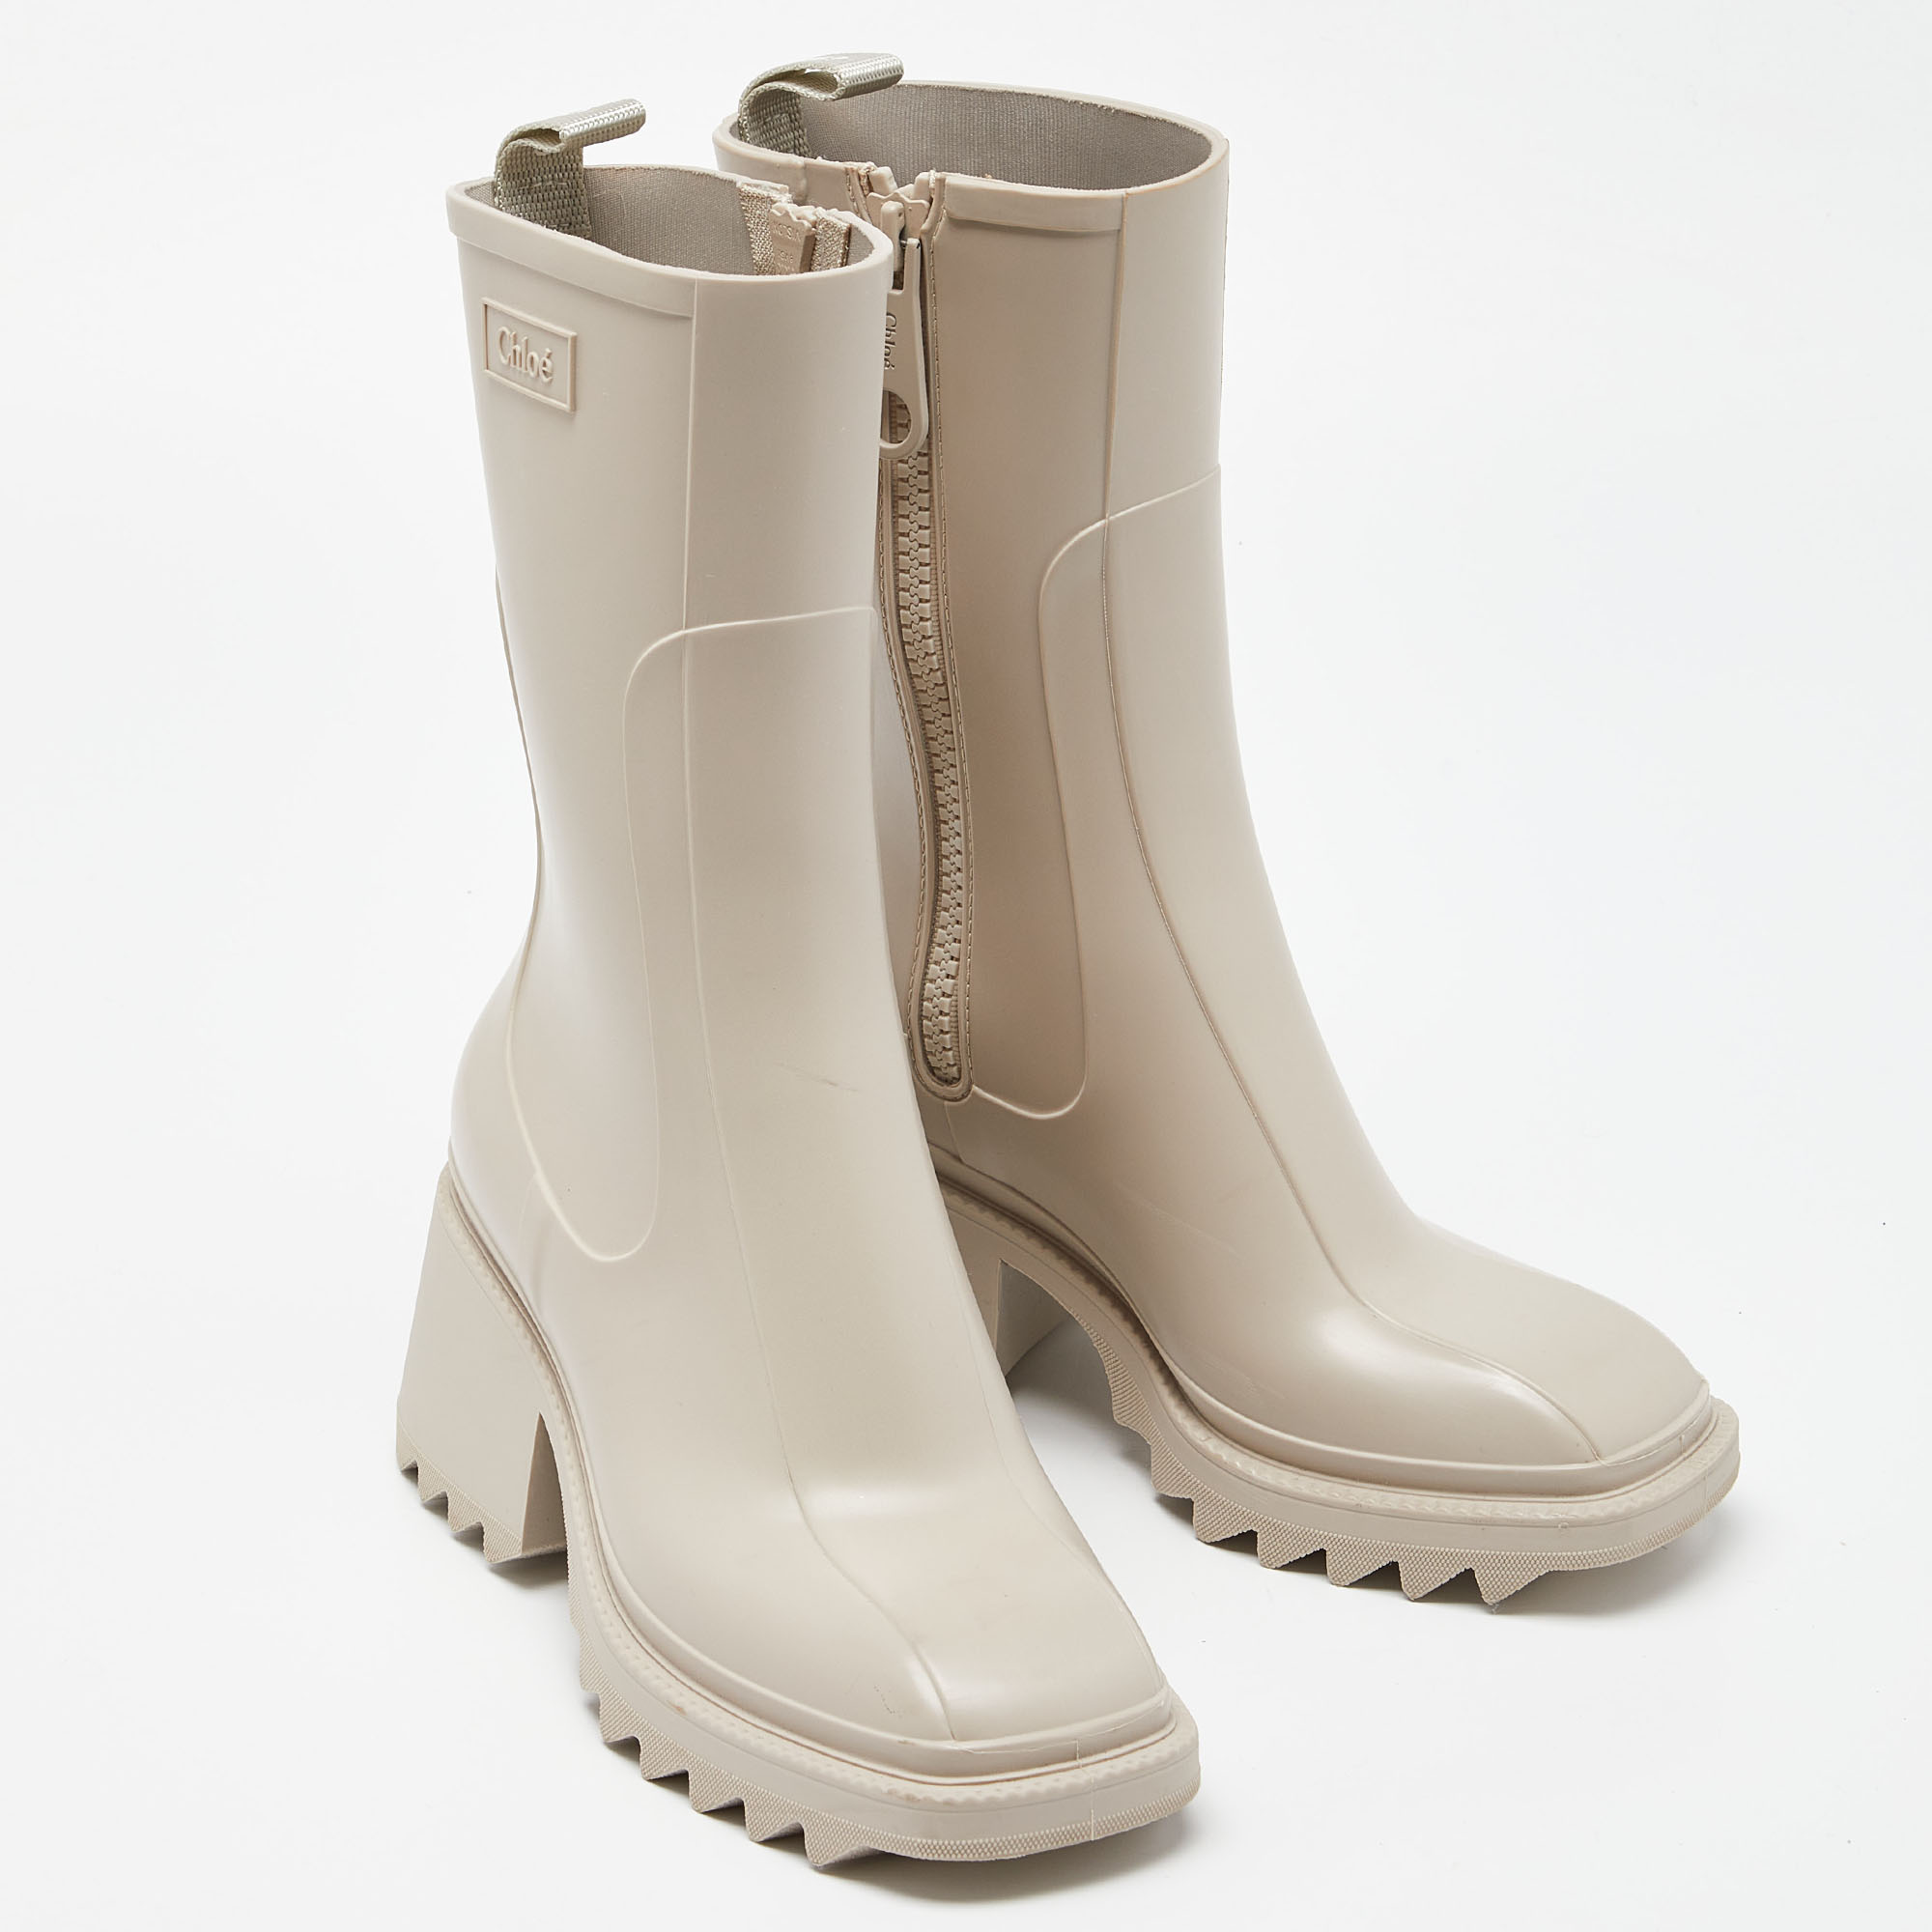 Chloe Cream Rubber Betty Mid Calf Rain Boots Size 38